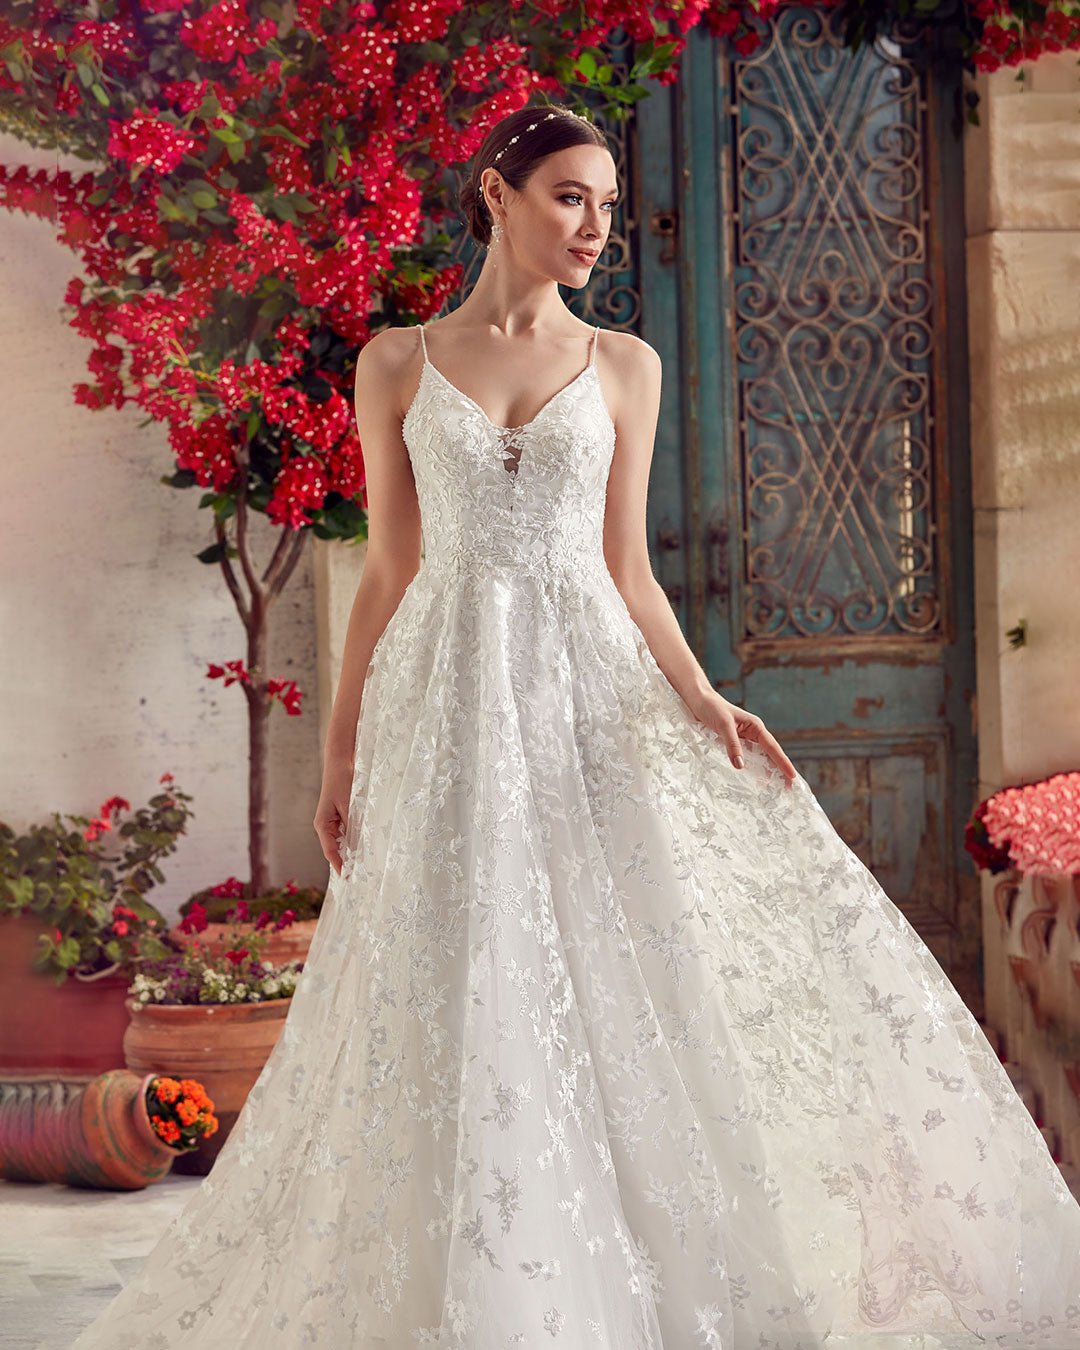 White lace wedding dress.